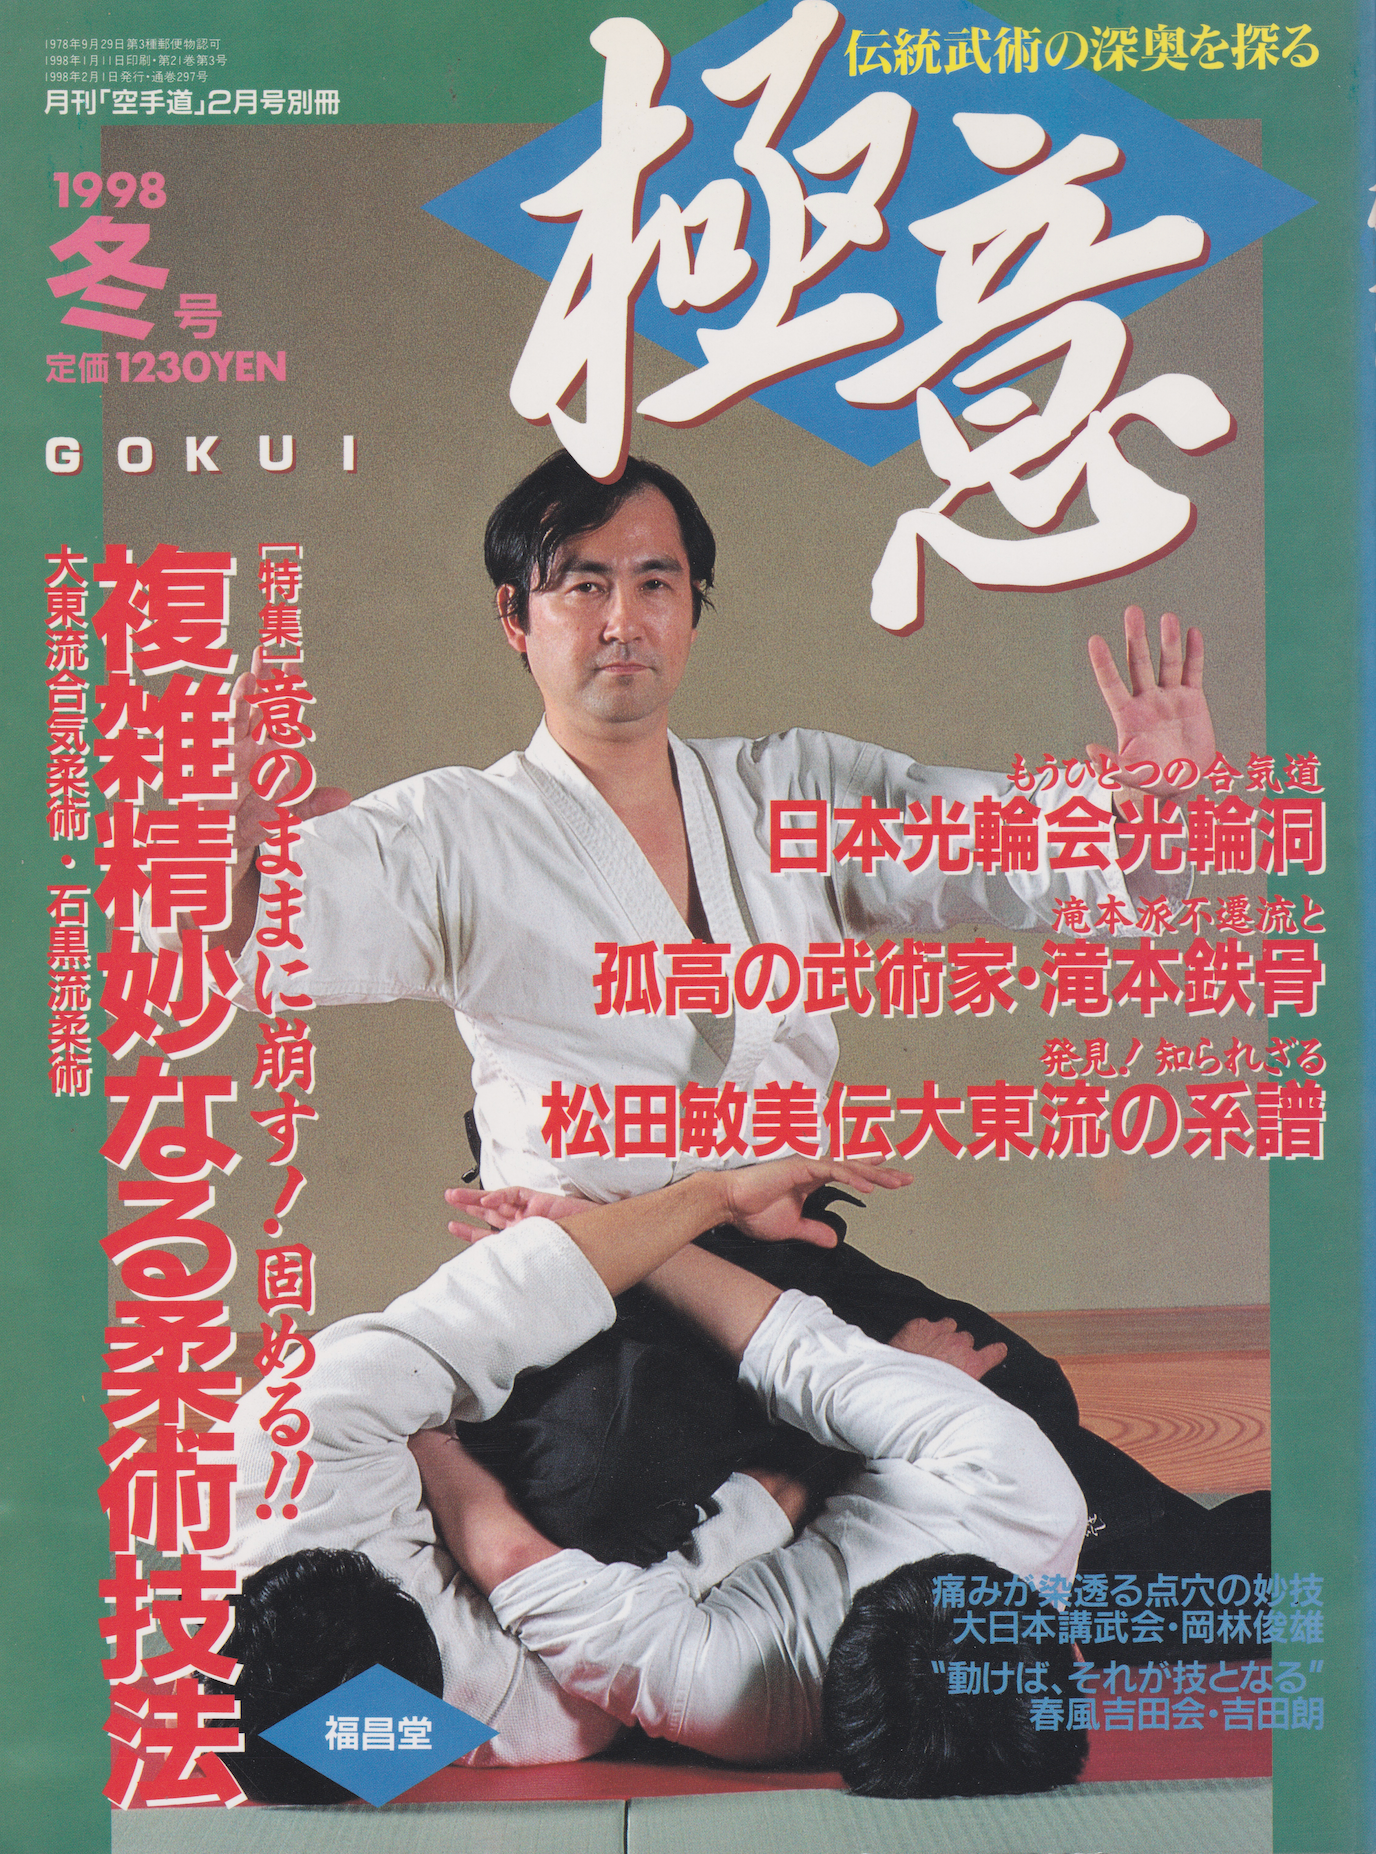 Gokui Magazine Feb 1998 (Preowned) - Budovideos Inc